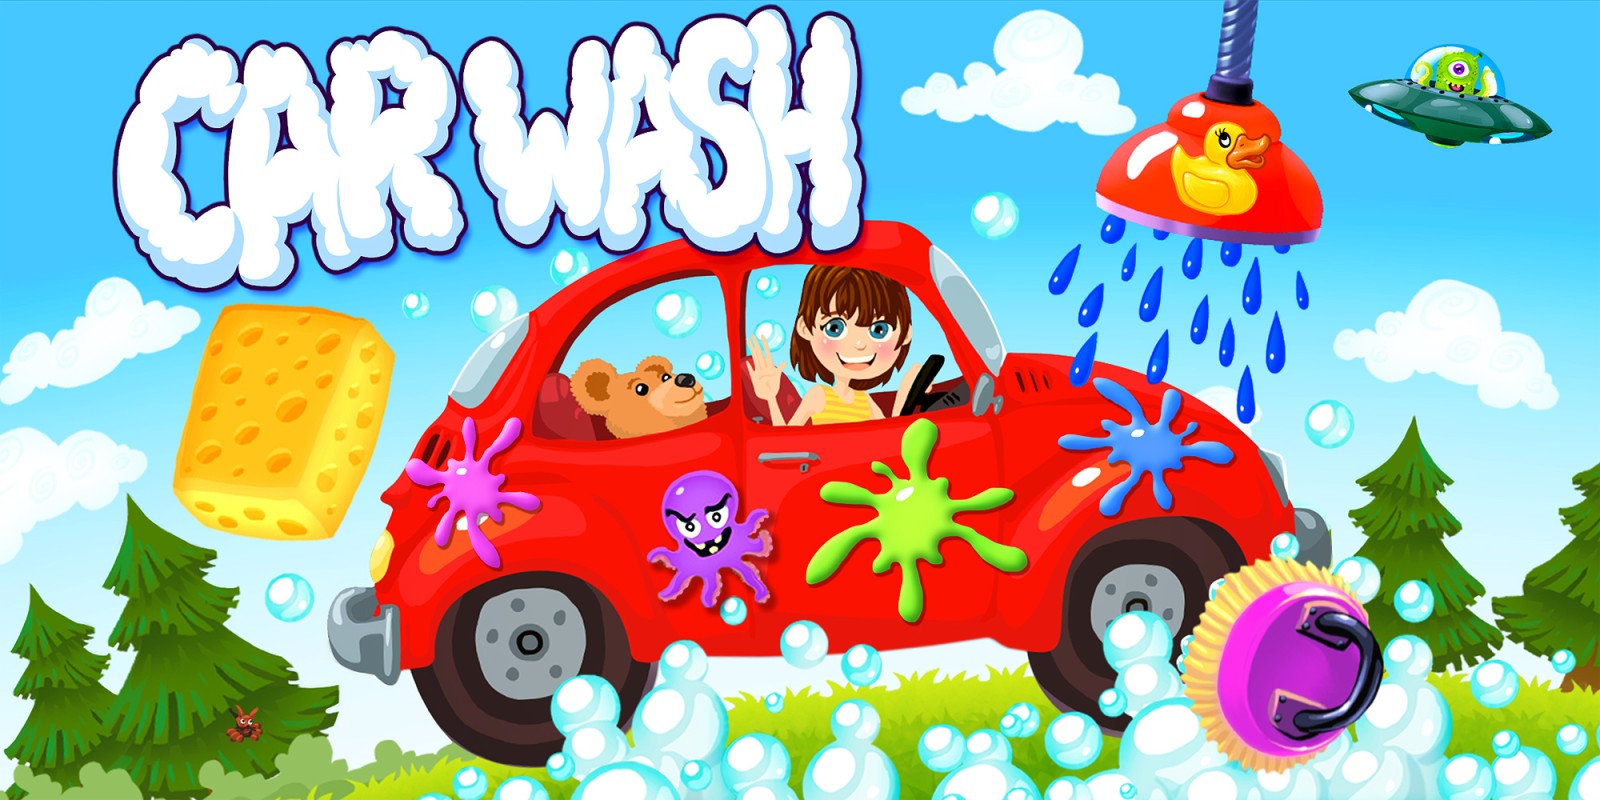 Virtual Girl Car Wash Game Programs